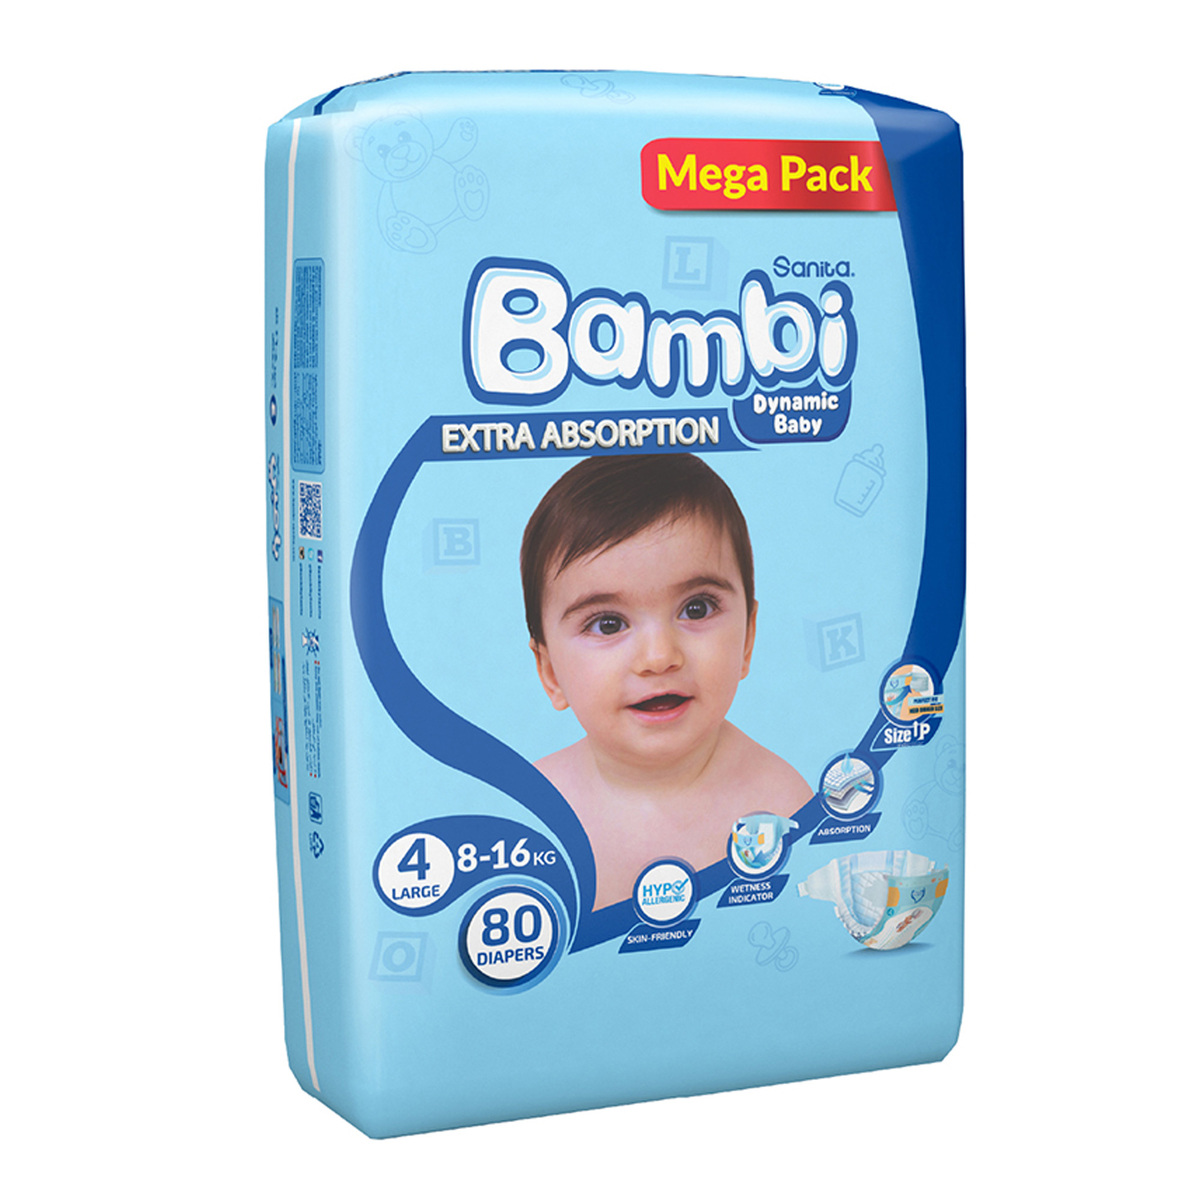 Sanita Bambi Baby Diaper Mega Pack Size 4 Large 8-16kg 80 pcs